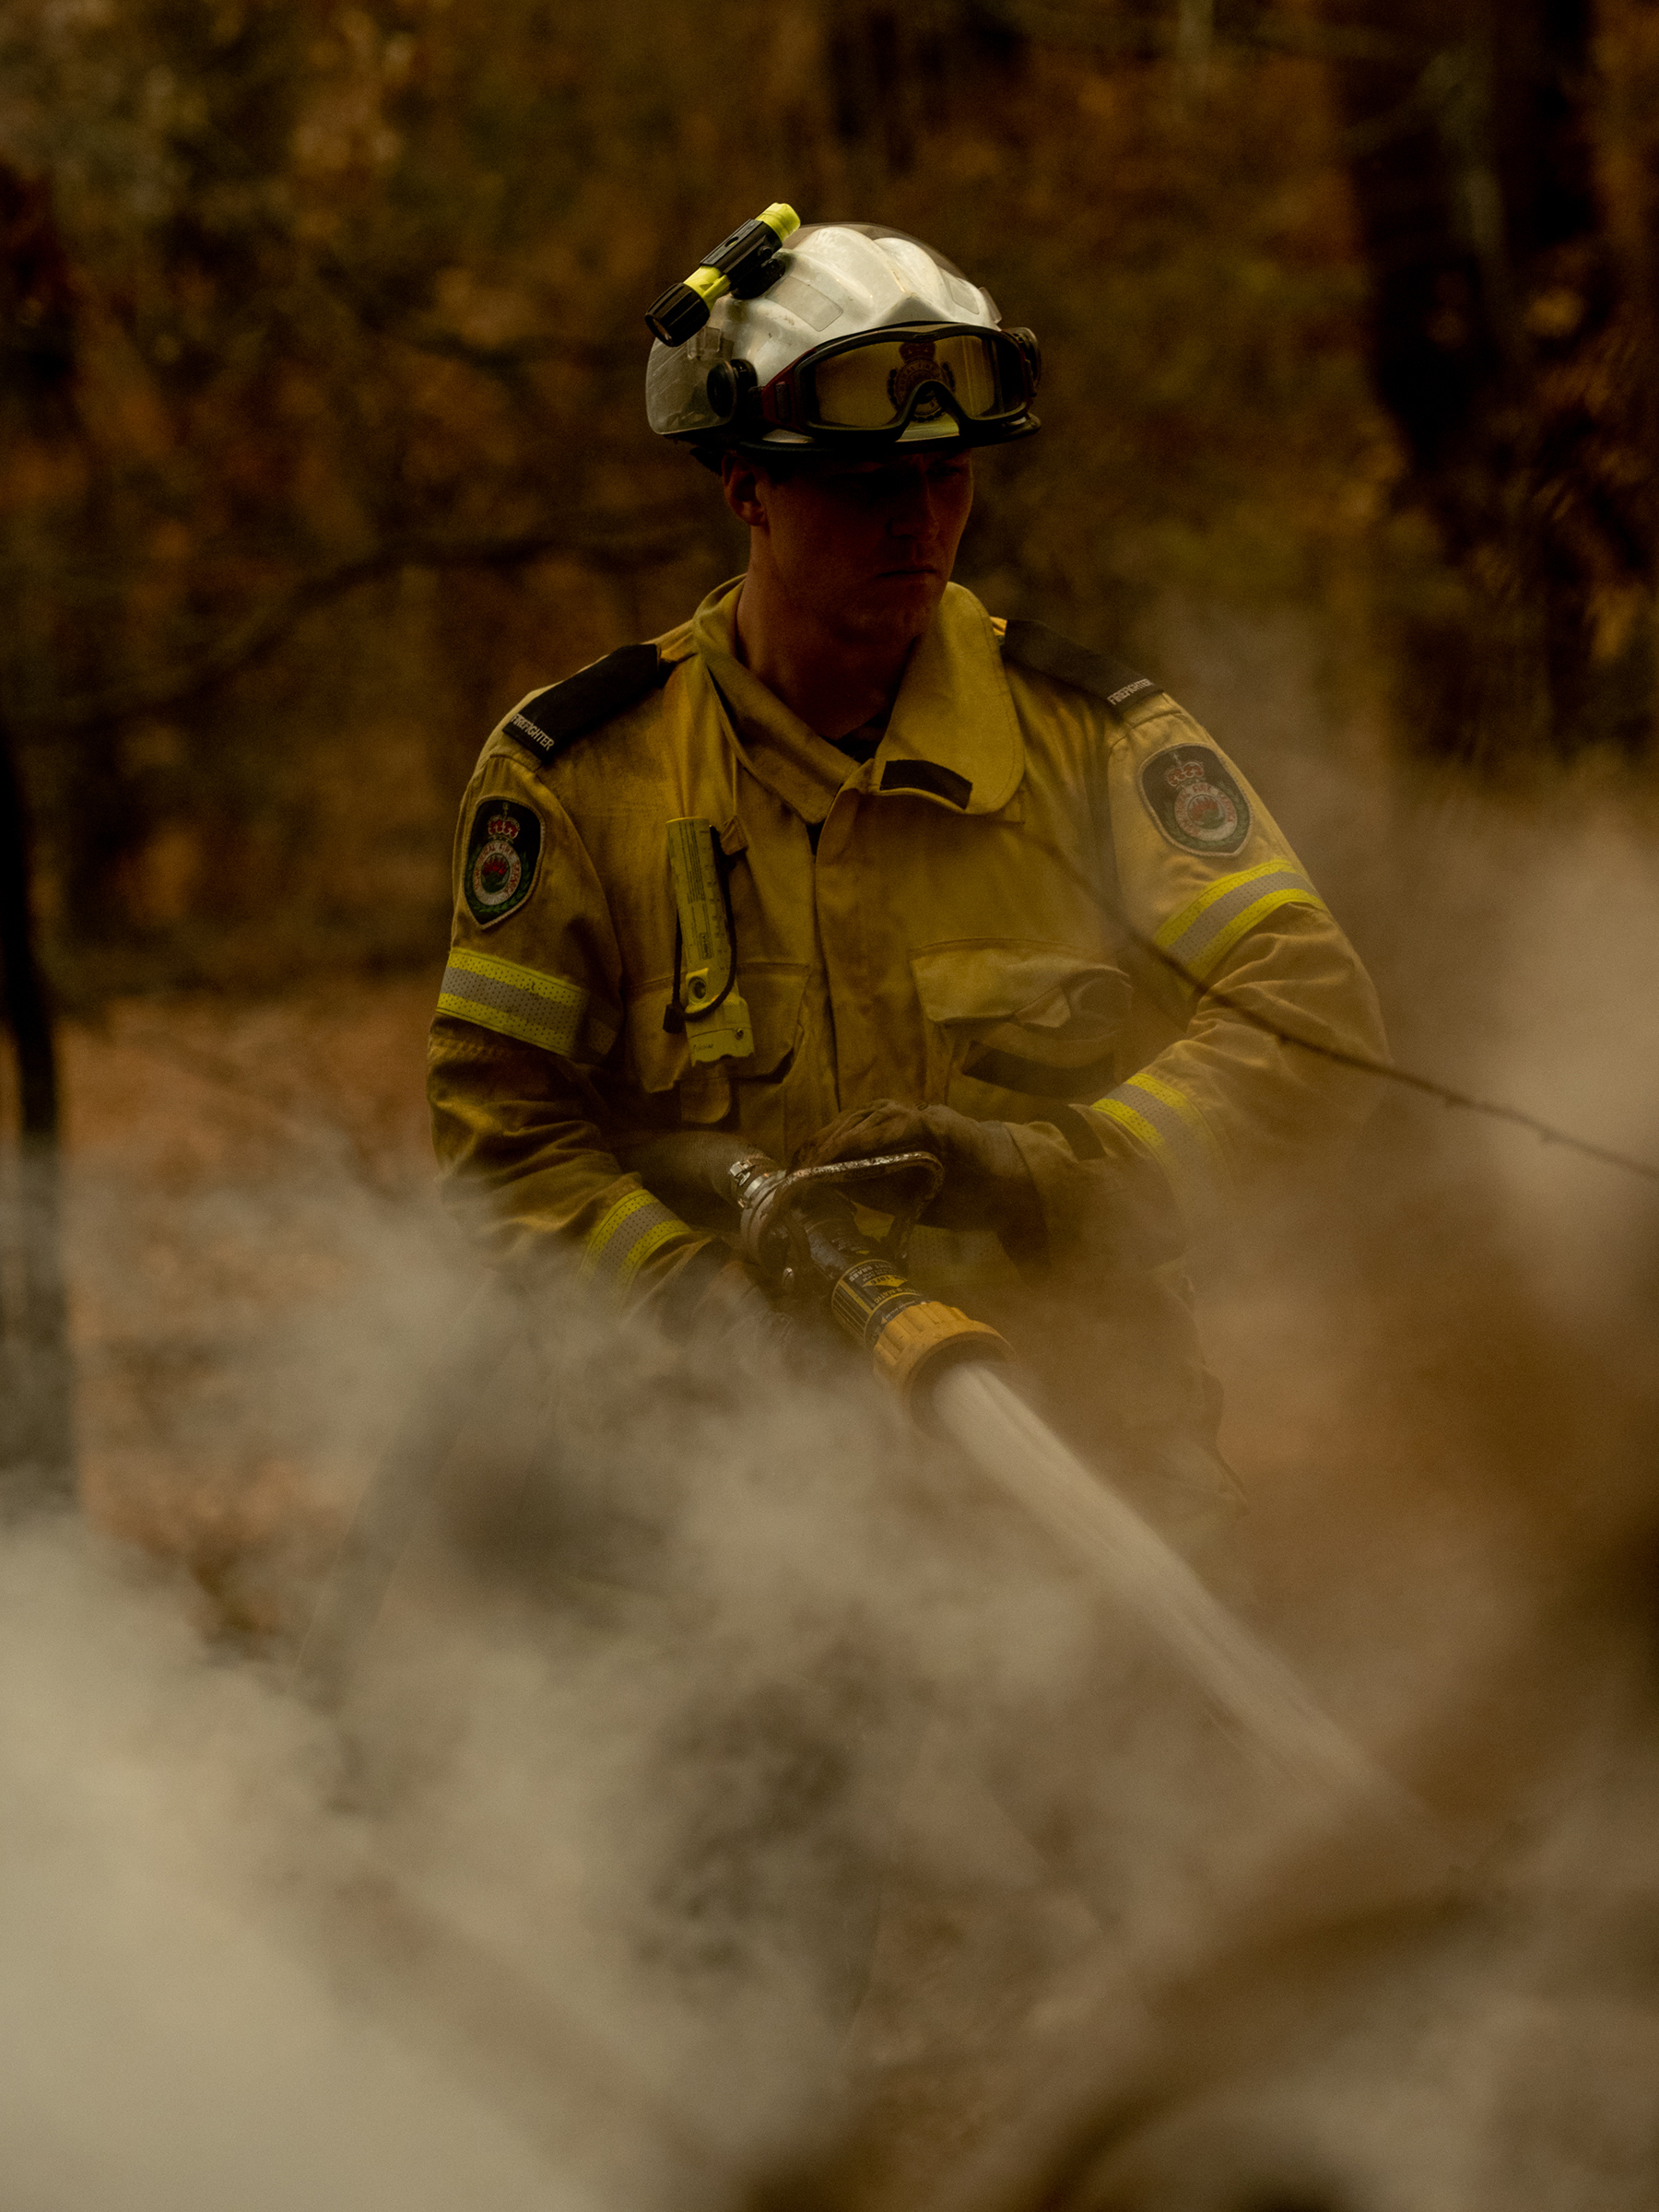 A New South Wales Rural Fire Service (RFS) member fights a fire in Lake Innes, Australia on Dec. 6, 2019. (Michaela Skovranova)